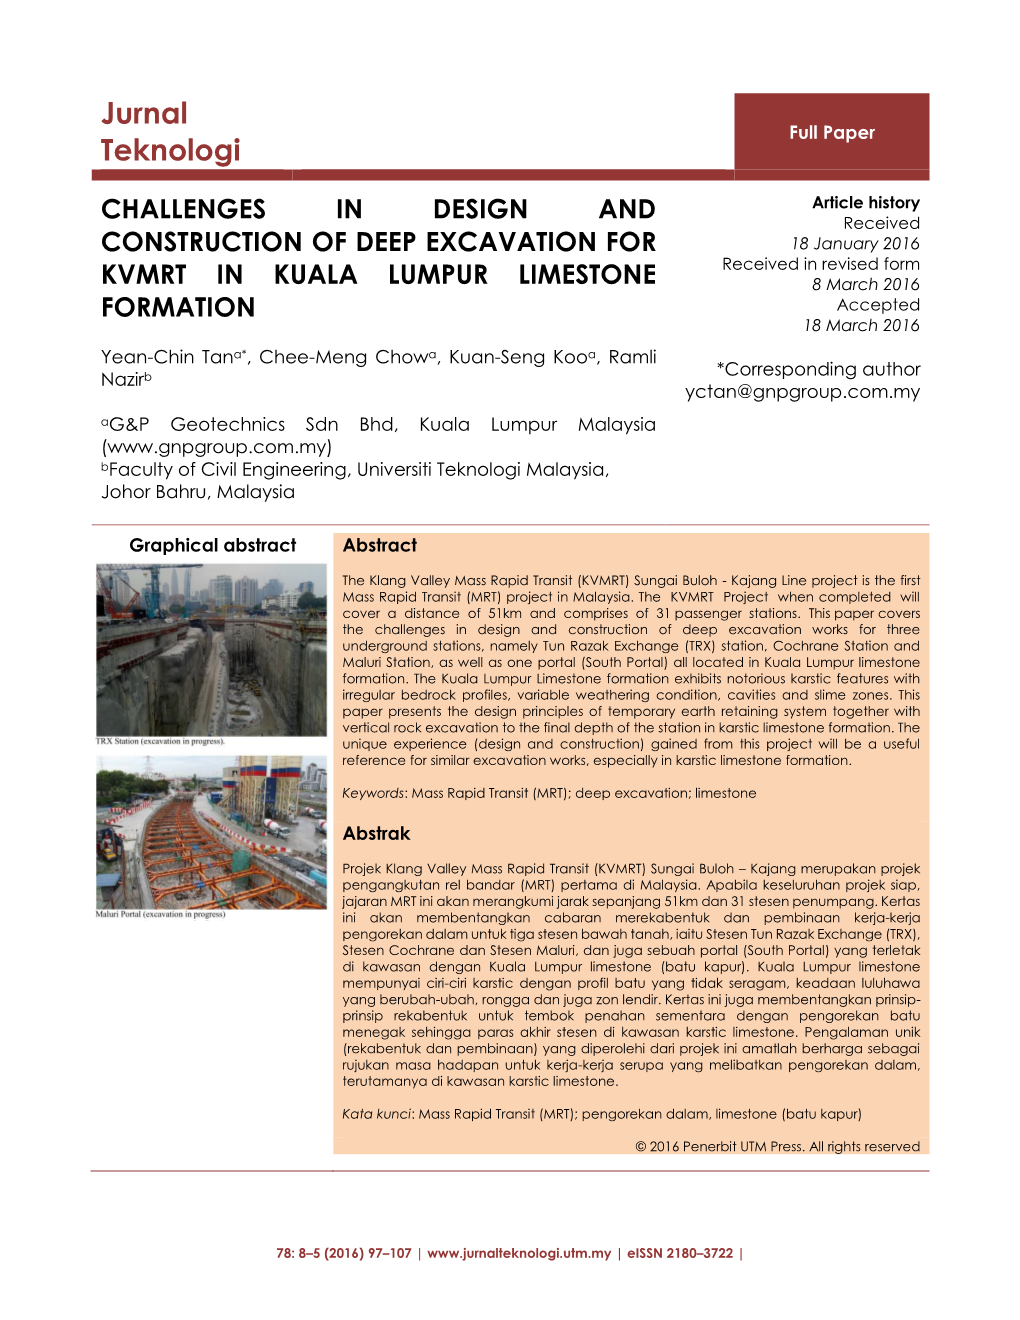 Challenges in Design and Construction of Deep Excavation for Kvmrt In